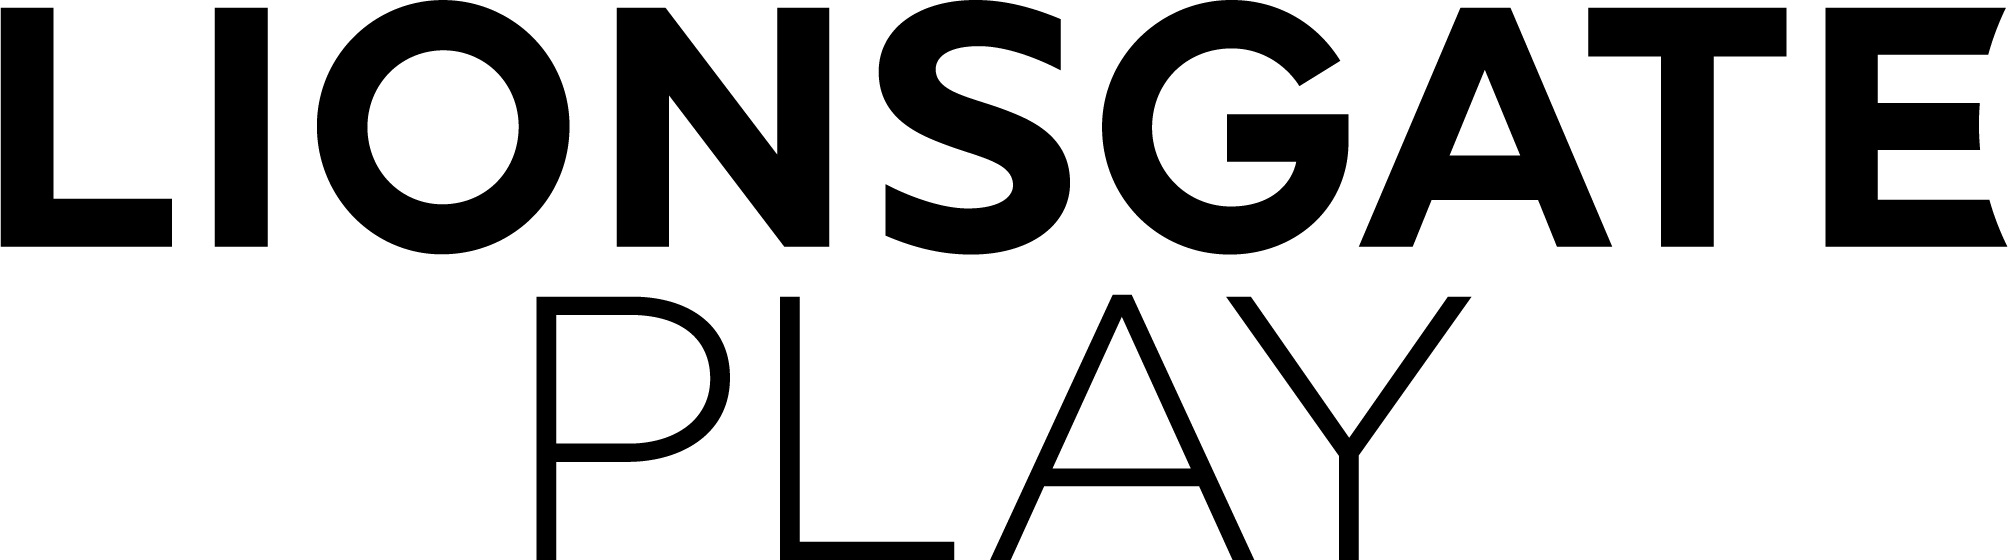 Lionsgate Play Logo 